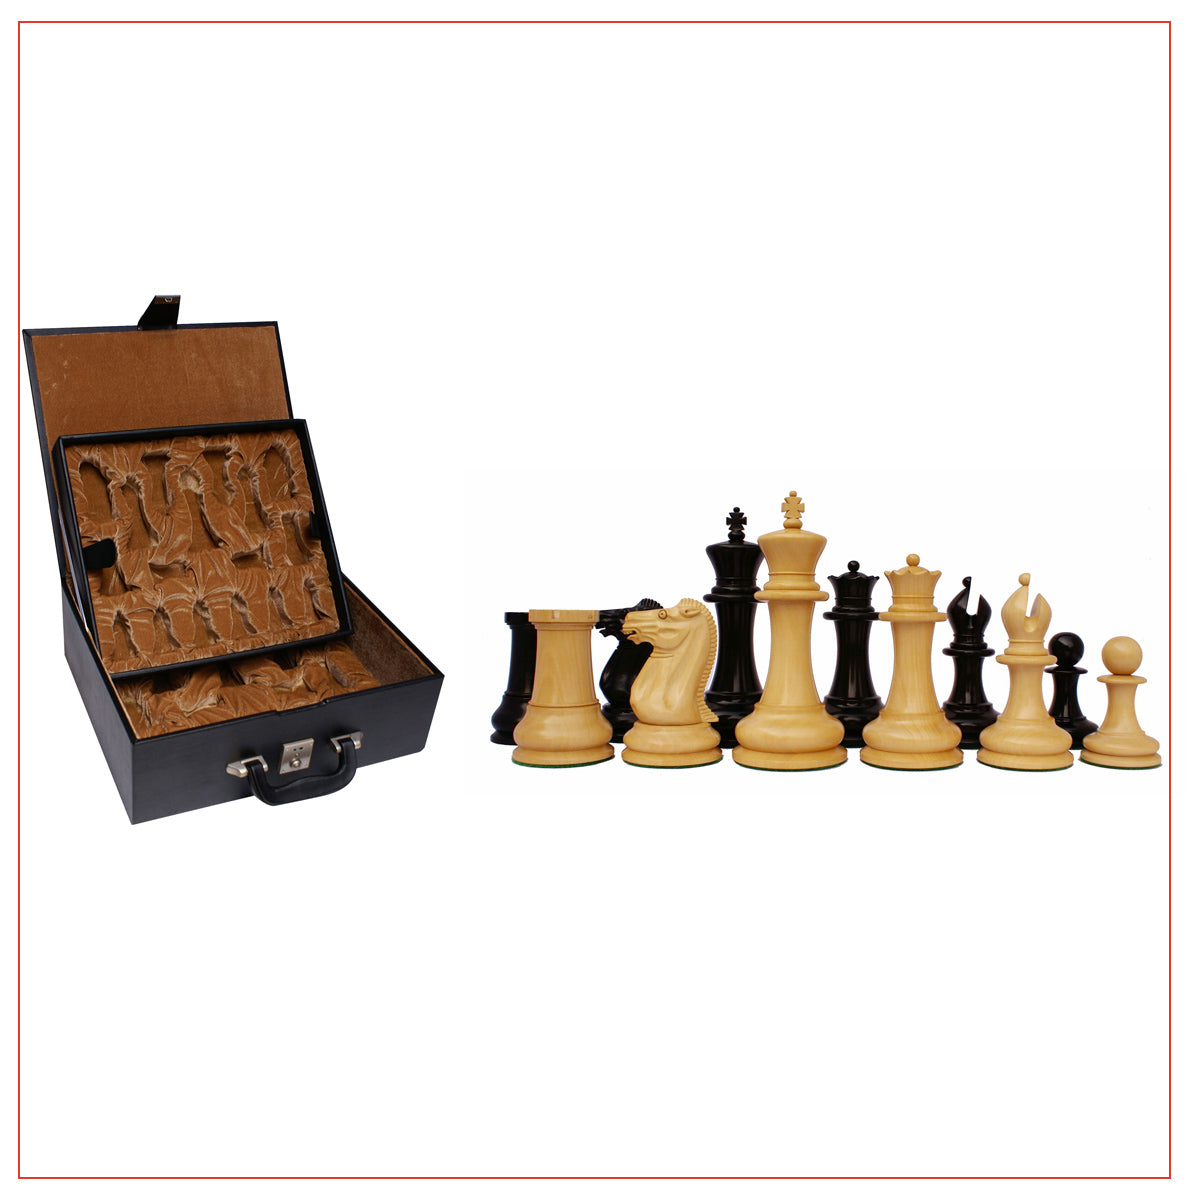 Jaques Reproduction Circa 1870-75 Staunton Chessmen With Presentation Box